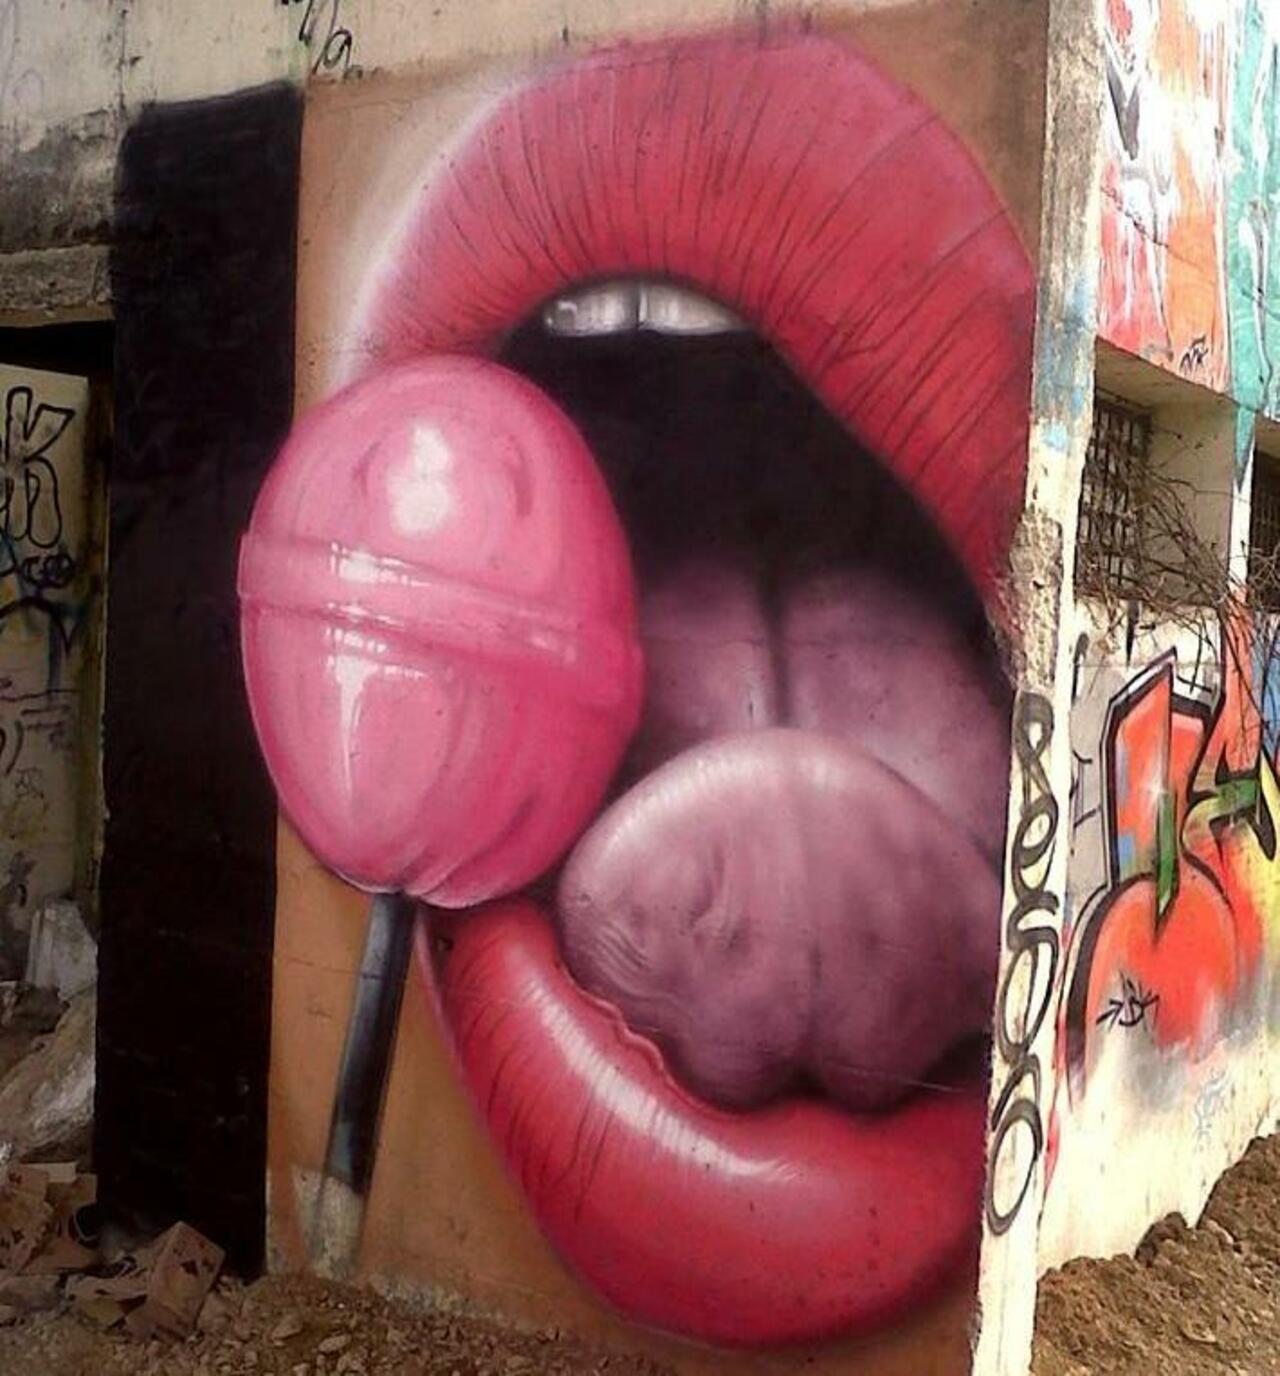 “@5putnik1: Lolli'Pop Art • #streetart #graffiti #art #funky #dope . : http://t.co/LmOwb4WBnT”